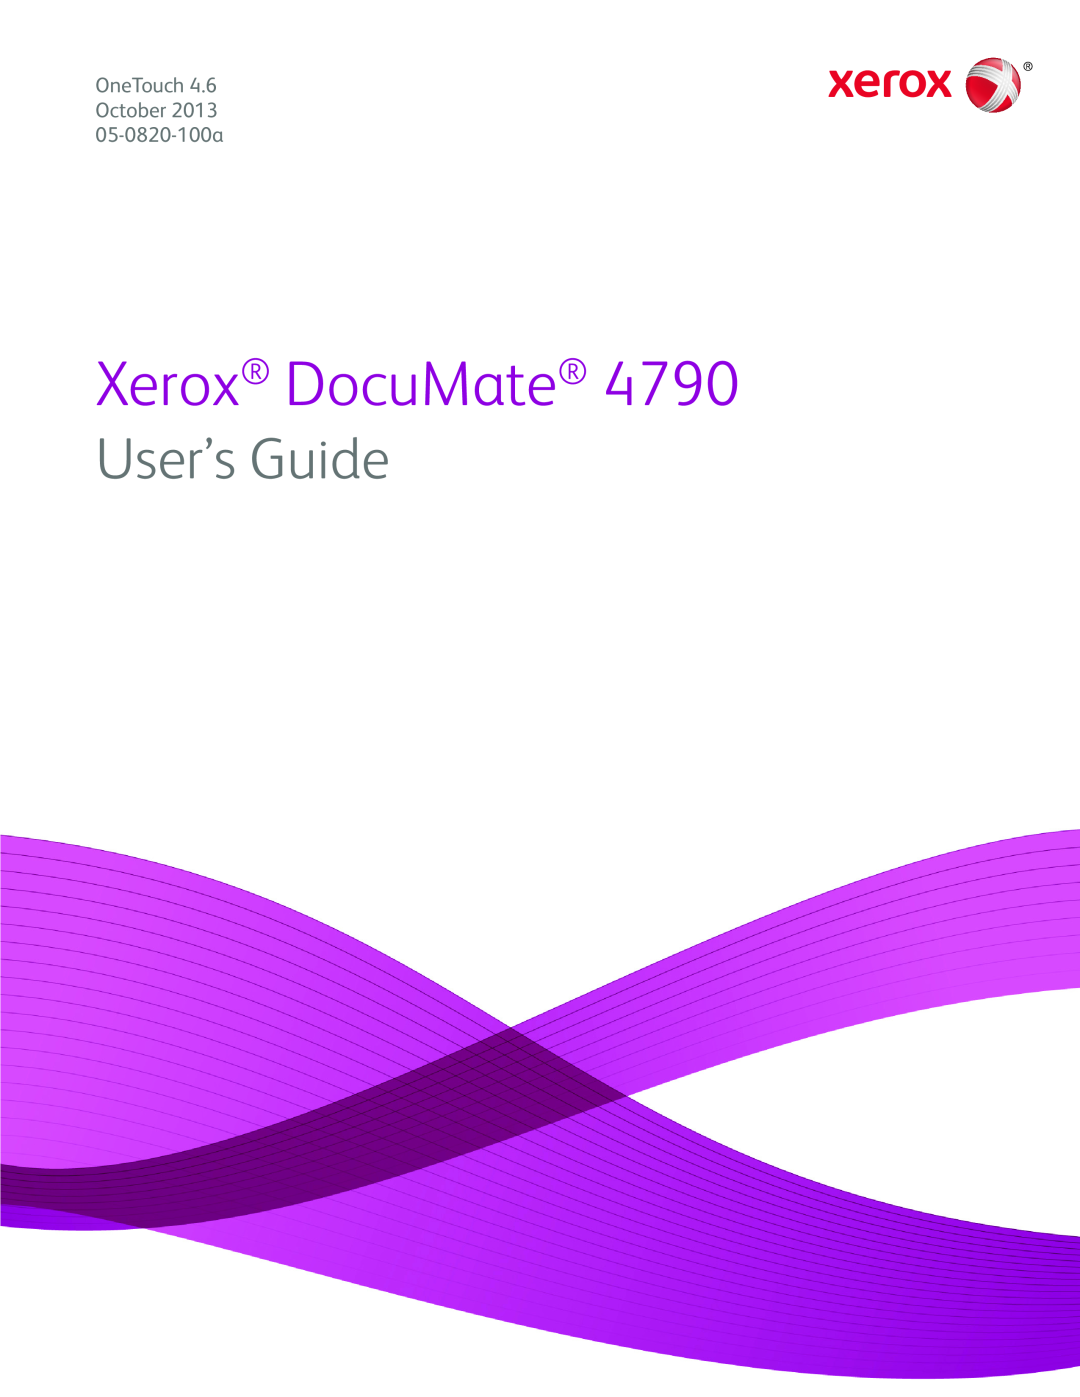 Xerox xerox documate manual Xerox DocuMate, User’s Guide, OneTouch 4.6 October 2013 05-0820-100a 